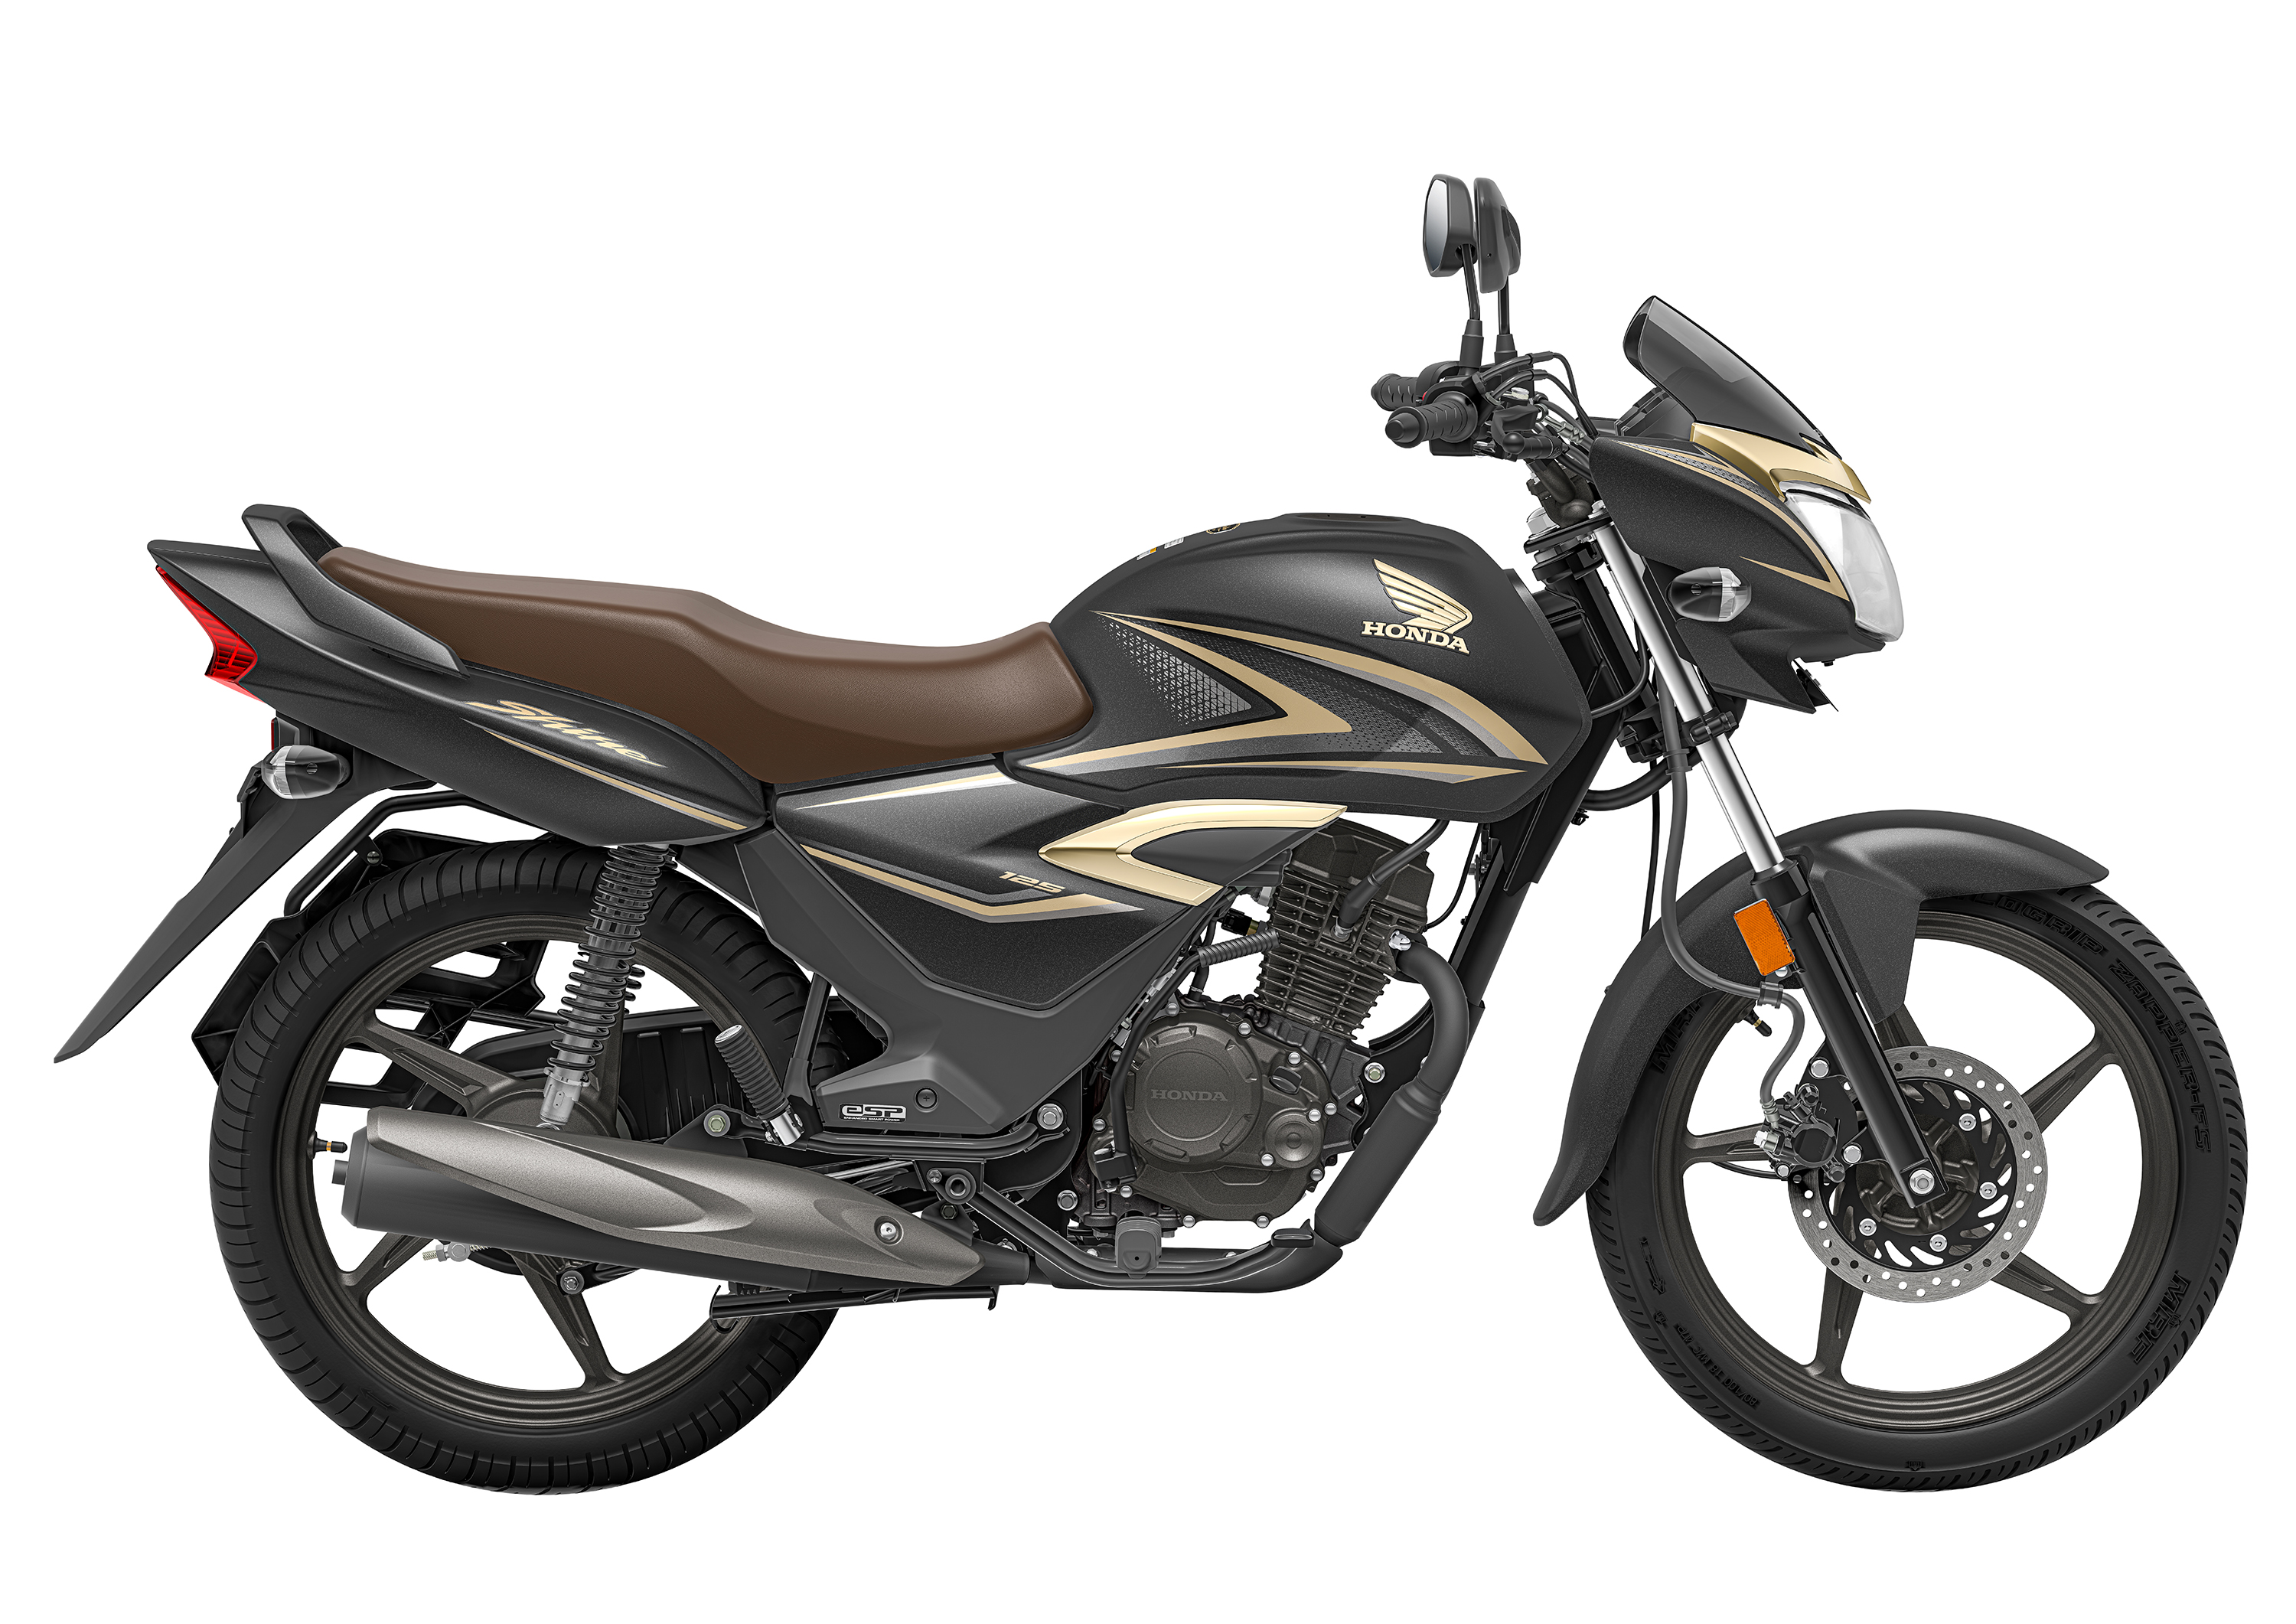 honda-motorcycle-scooter-india-enters-festive-season-with-new-shine-celebration-edition